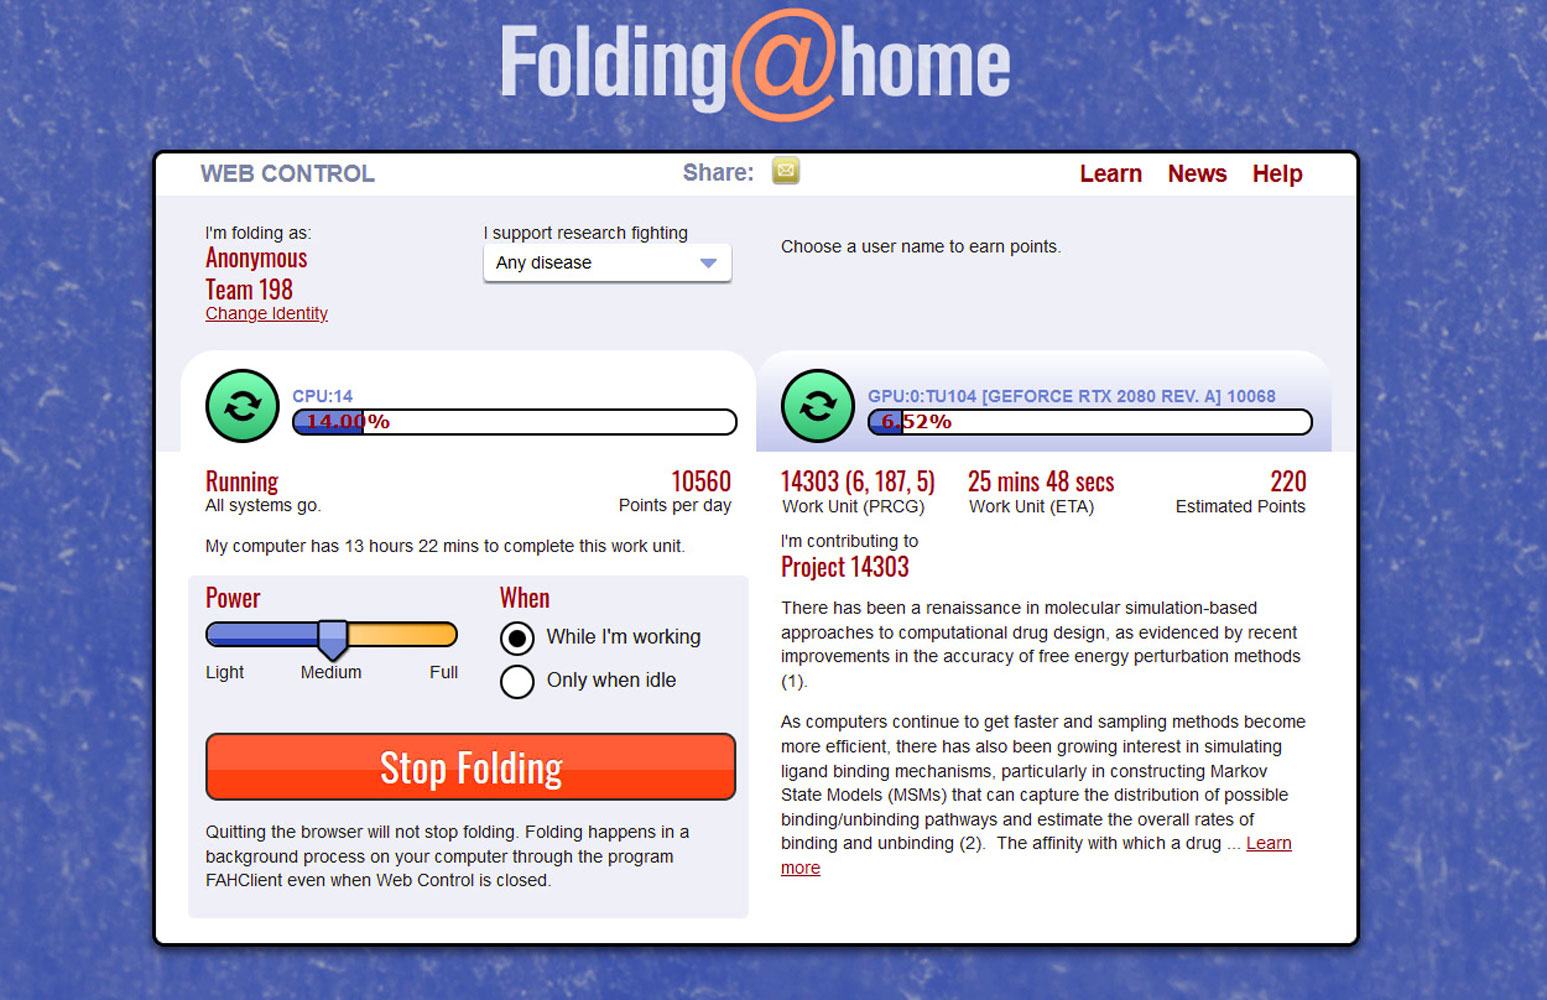 Folding@home